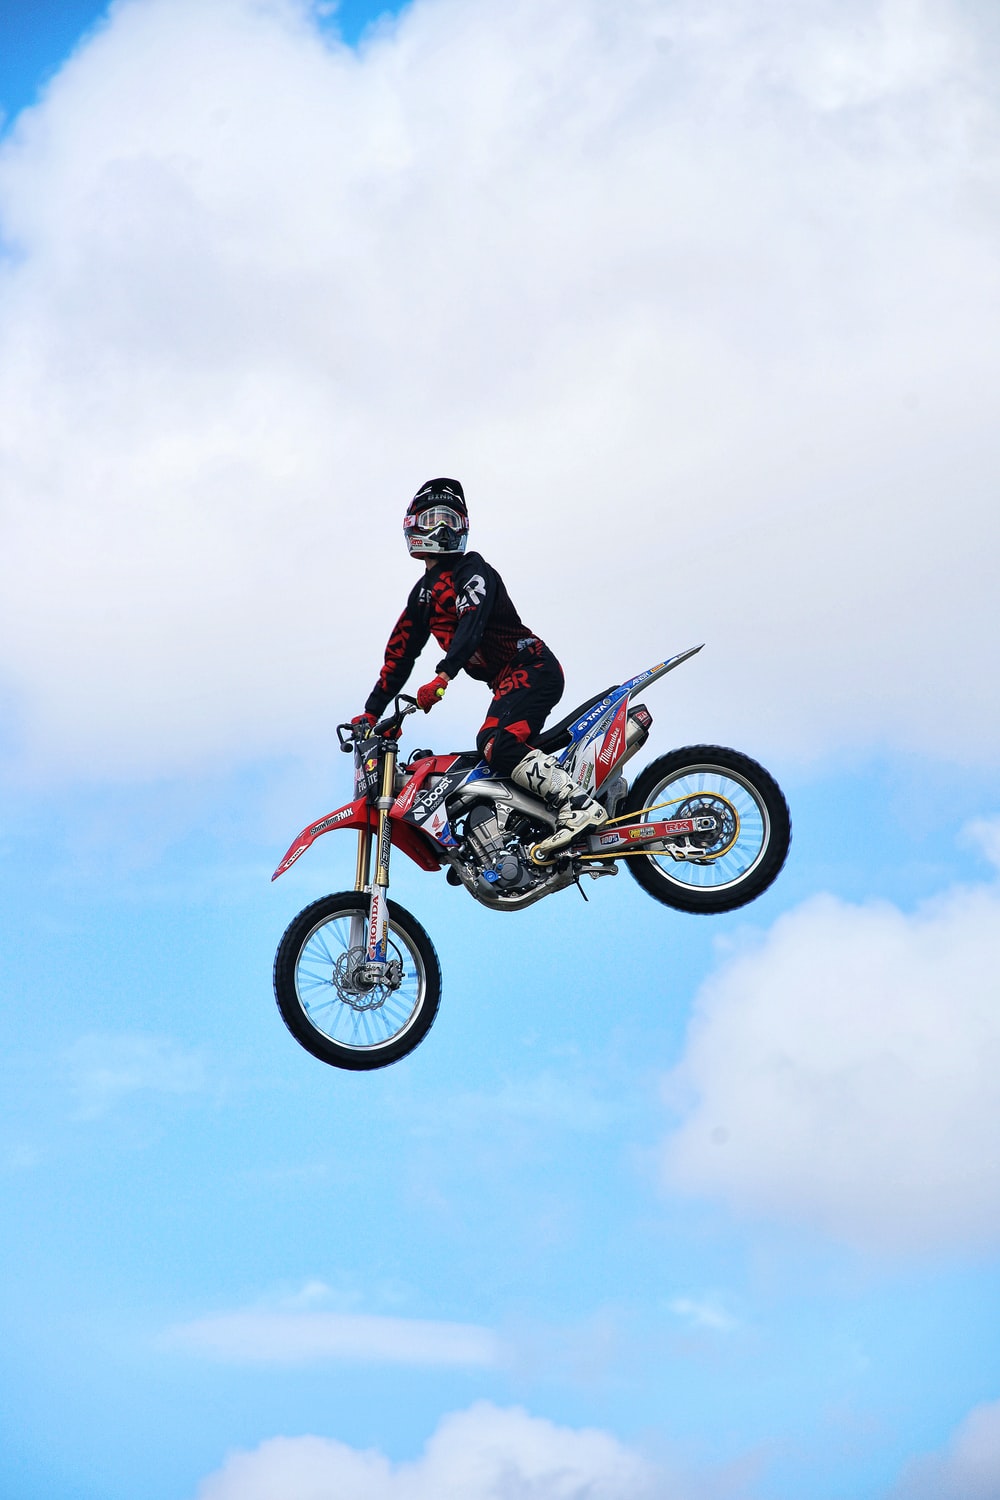 1K+ Bike Stunt Picture. Download Free Image